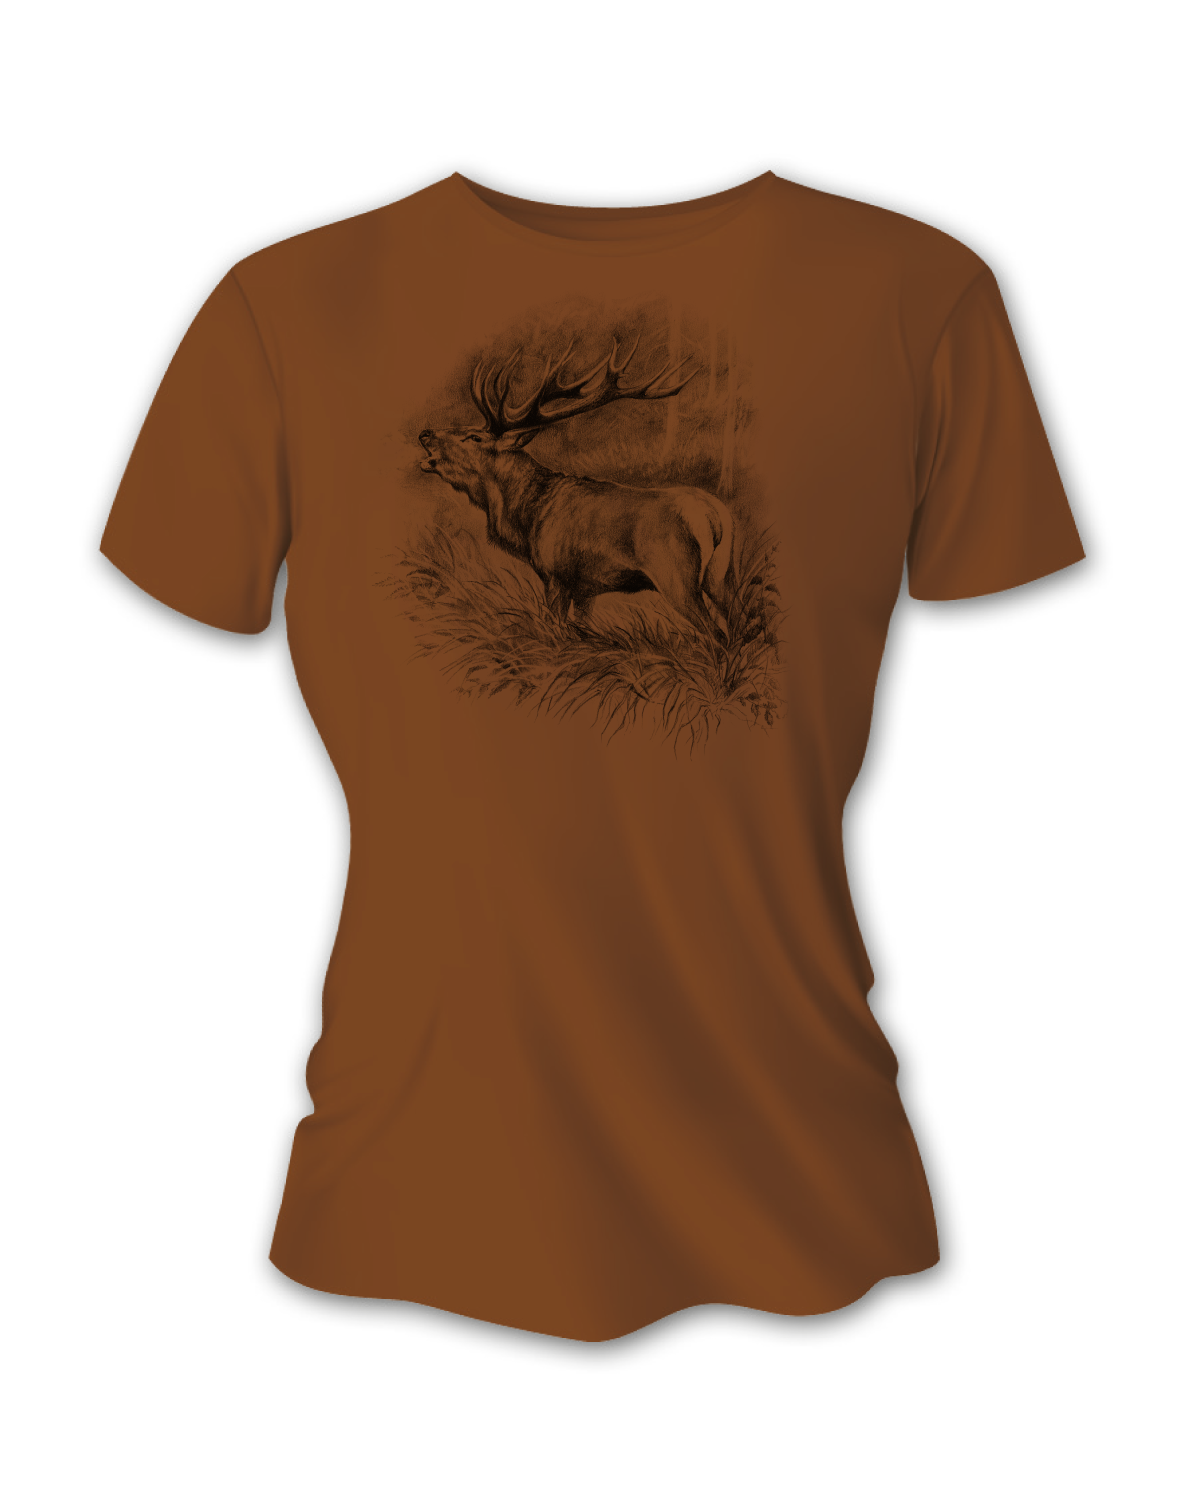 Dámske poľovnícke tričko TETRAO jeleň veľký - hnedé  S